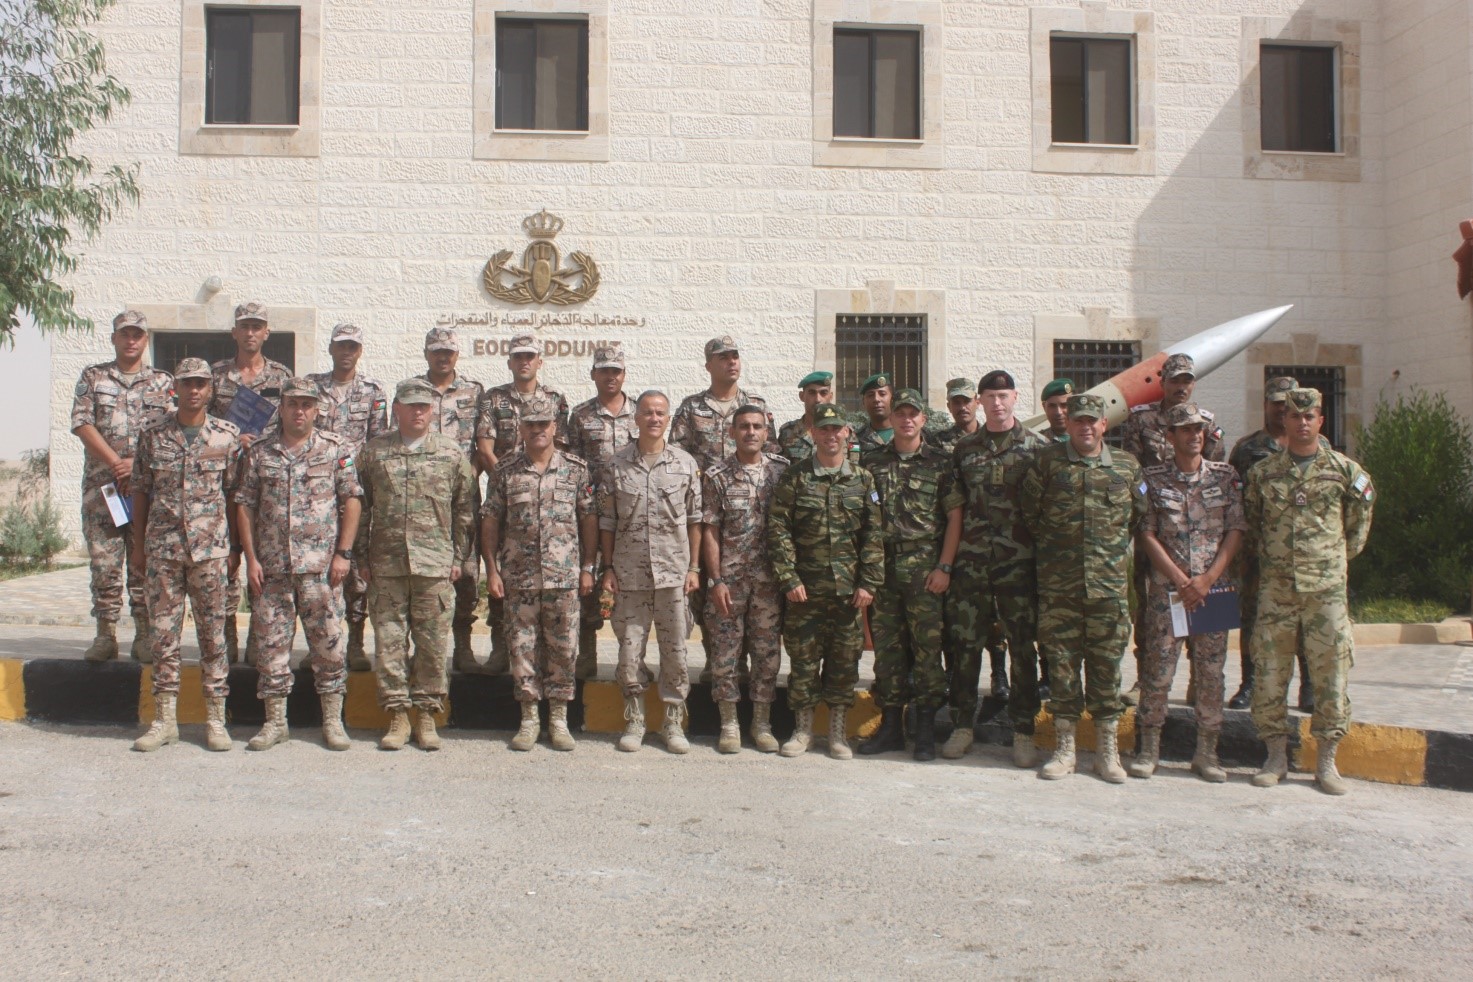 Apoyo del C-IED COE a la “Royal Jordanian Army”.